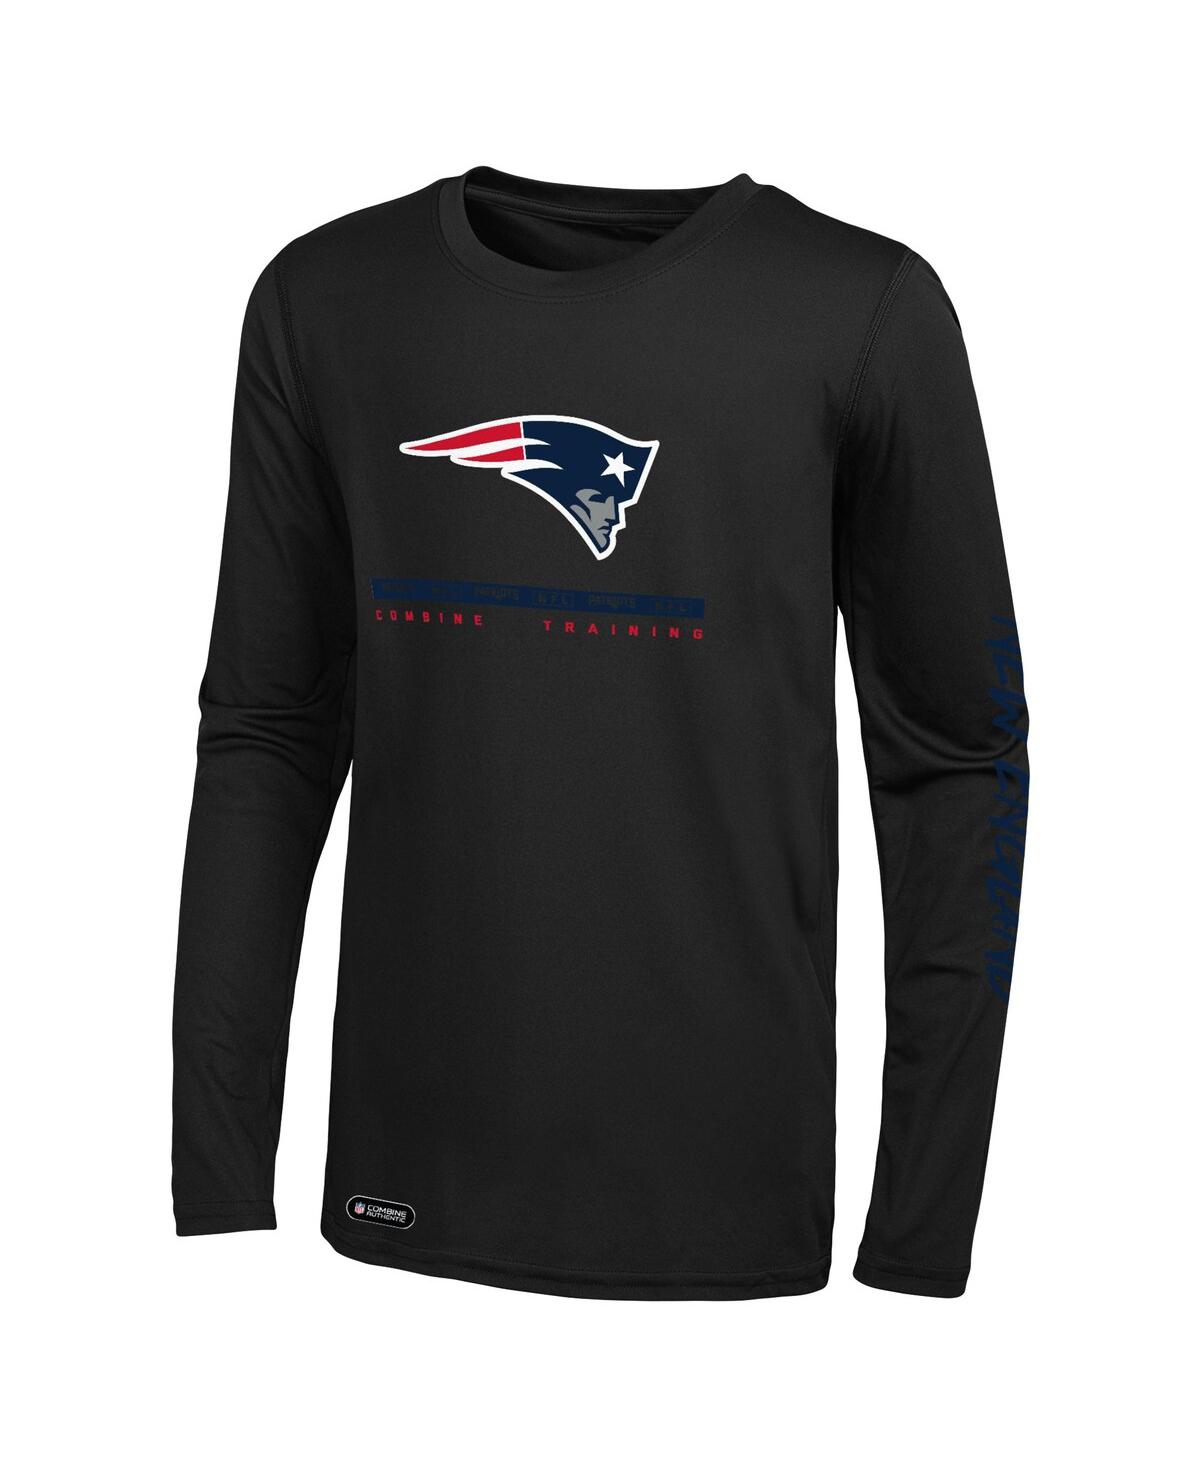 Shop Outerstuff Men's Black New England Patriots Agility Long Sleeve T-shirt